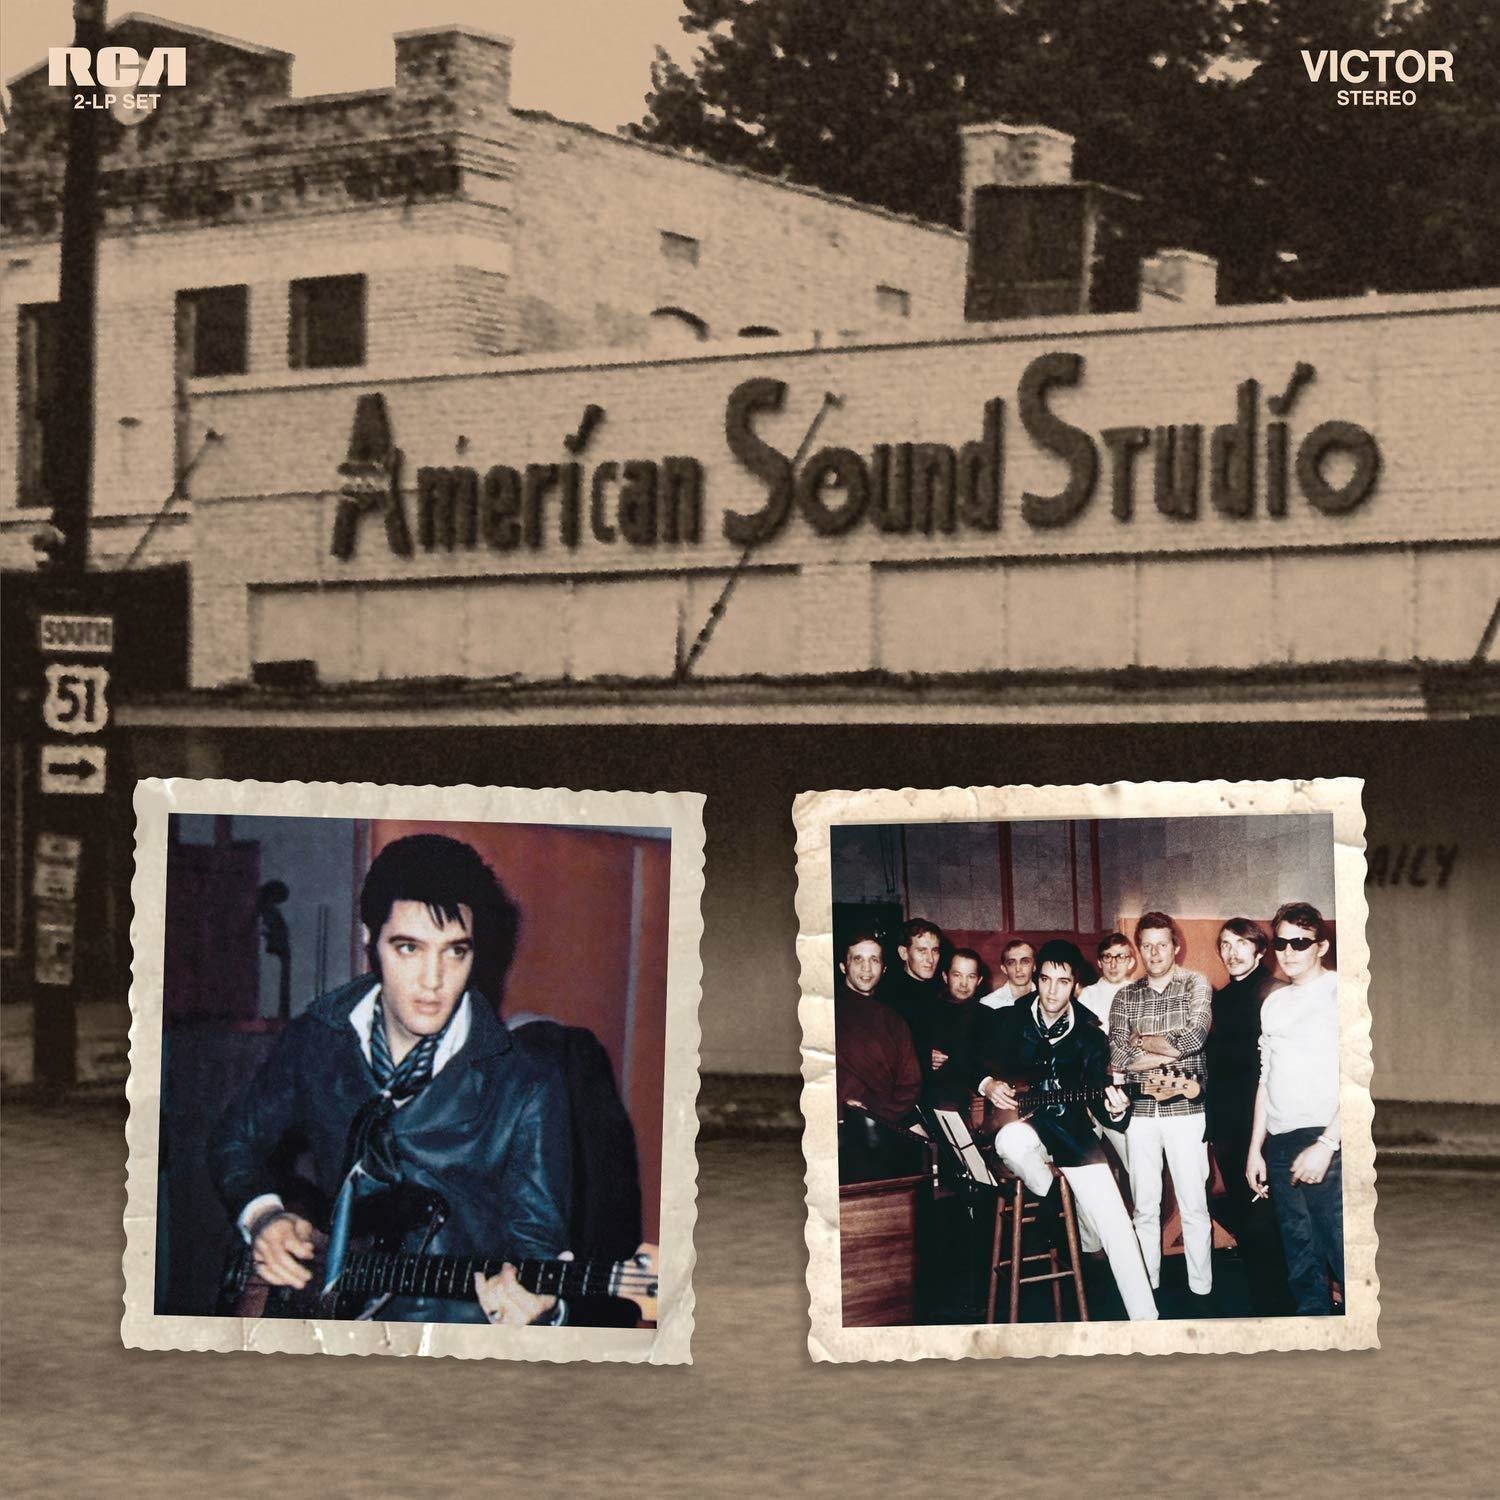 Vinyl Record Elvis Presley American Sound 1969 Highlights (2 LP)